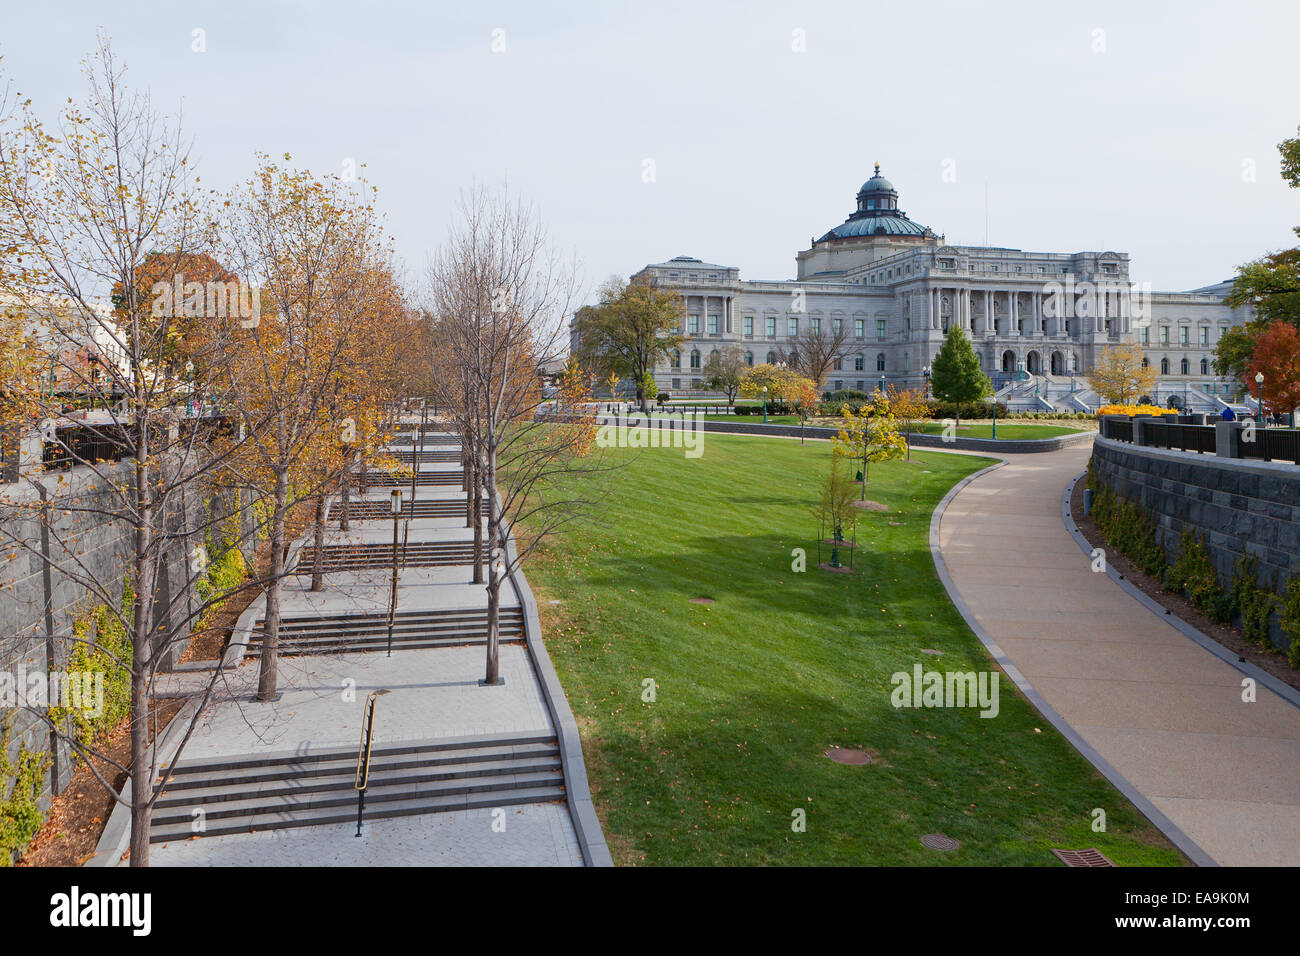 Library of Congress - Washington, DC USA Stock Photo